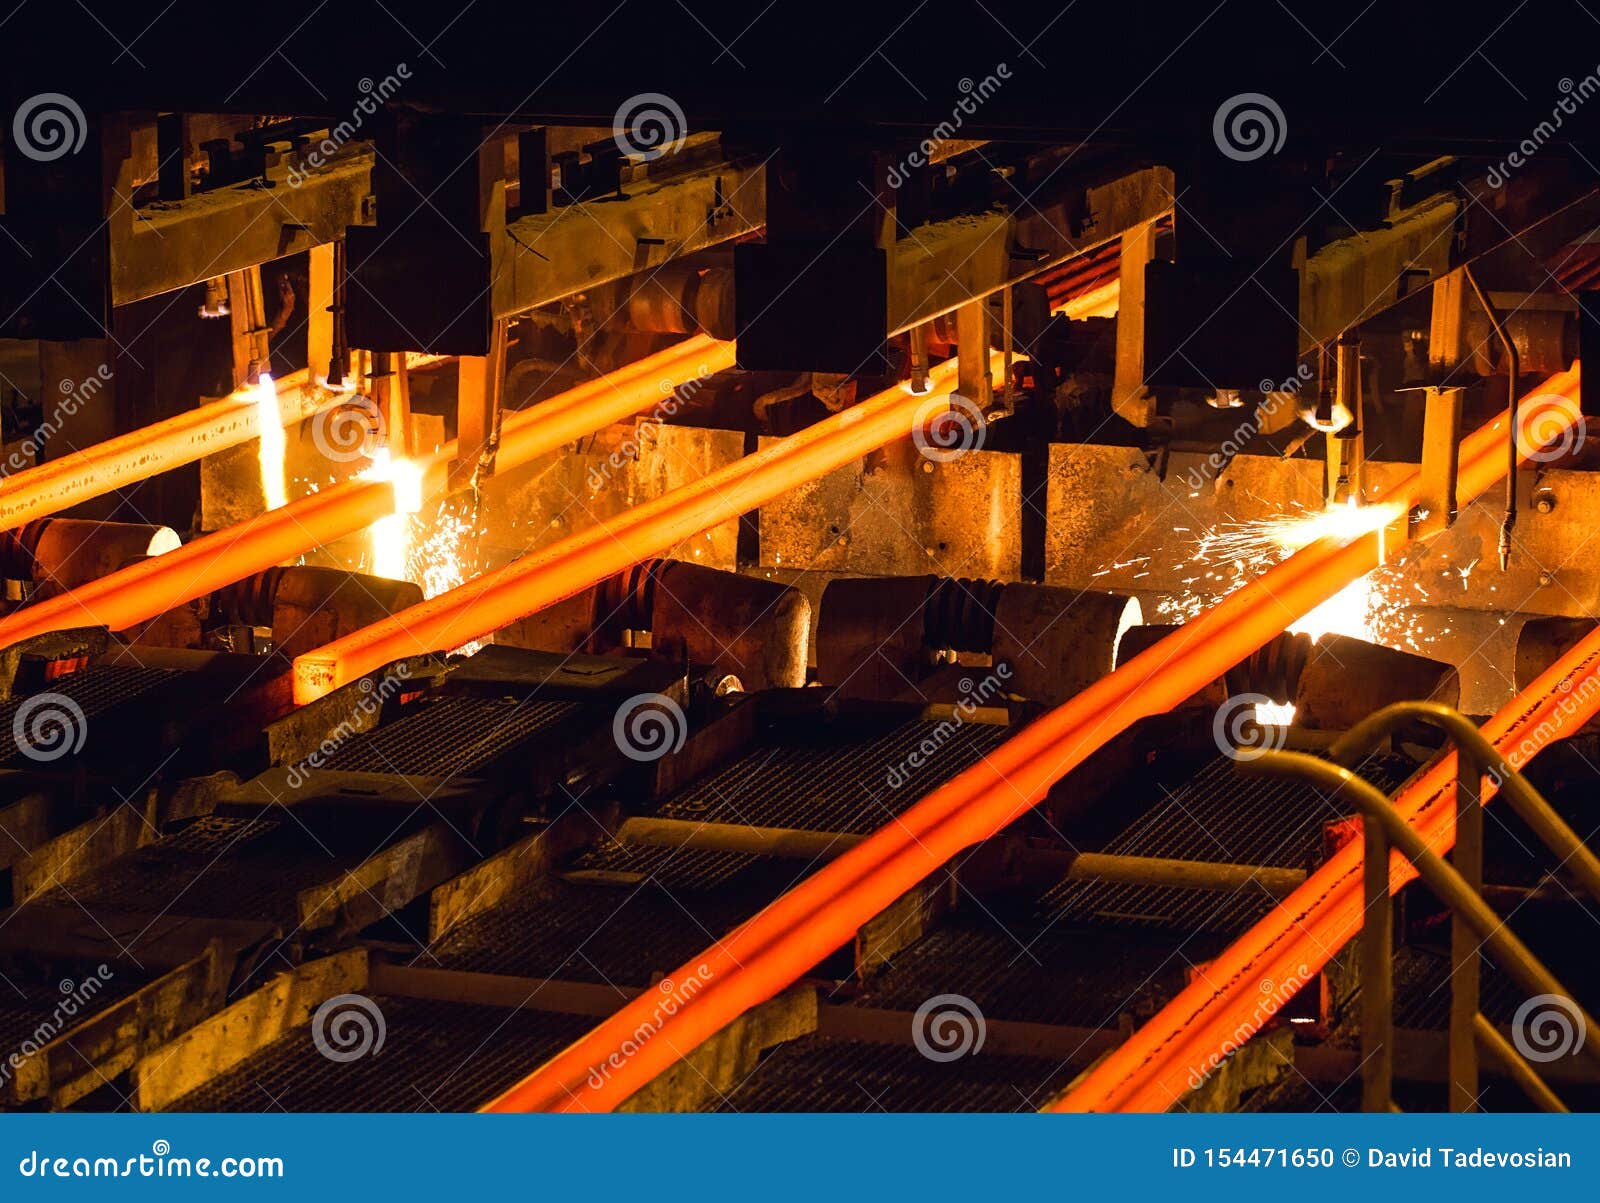 steel billets at torch cutting. huge ironworks.